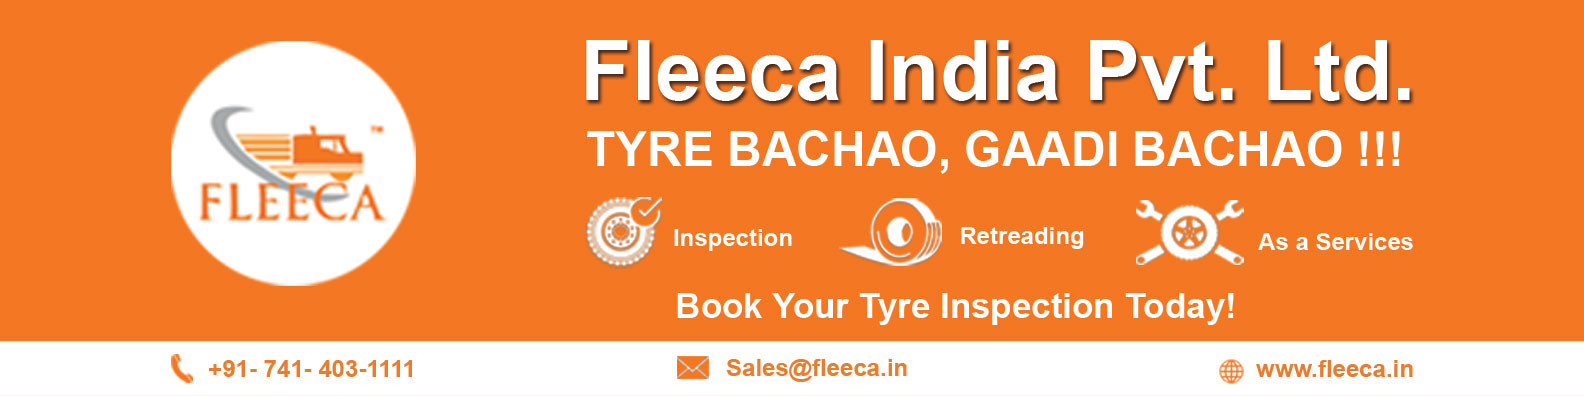 Fleeca India eyes 200 service centers this year